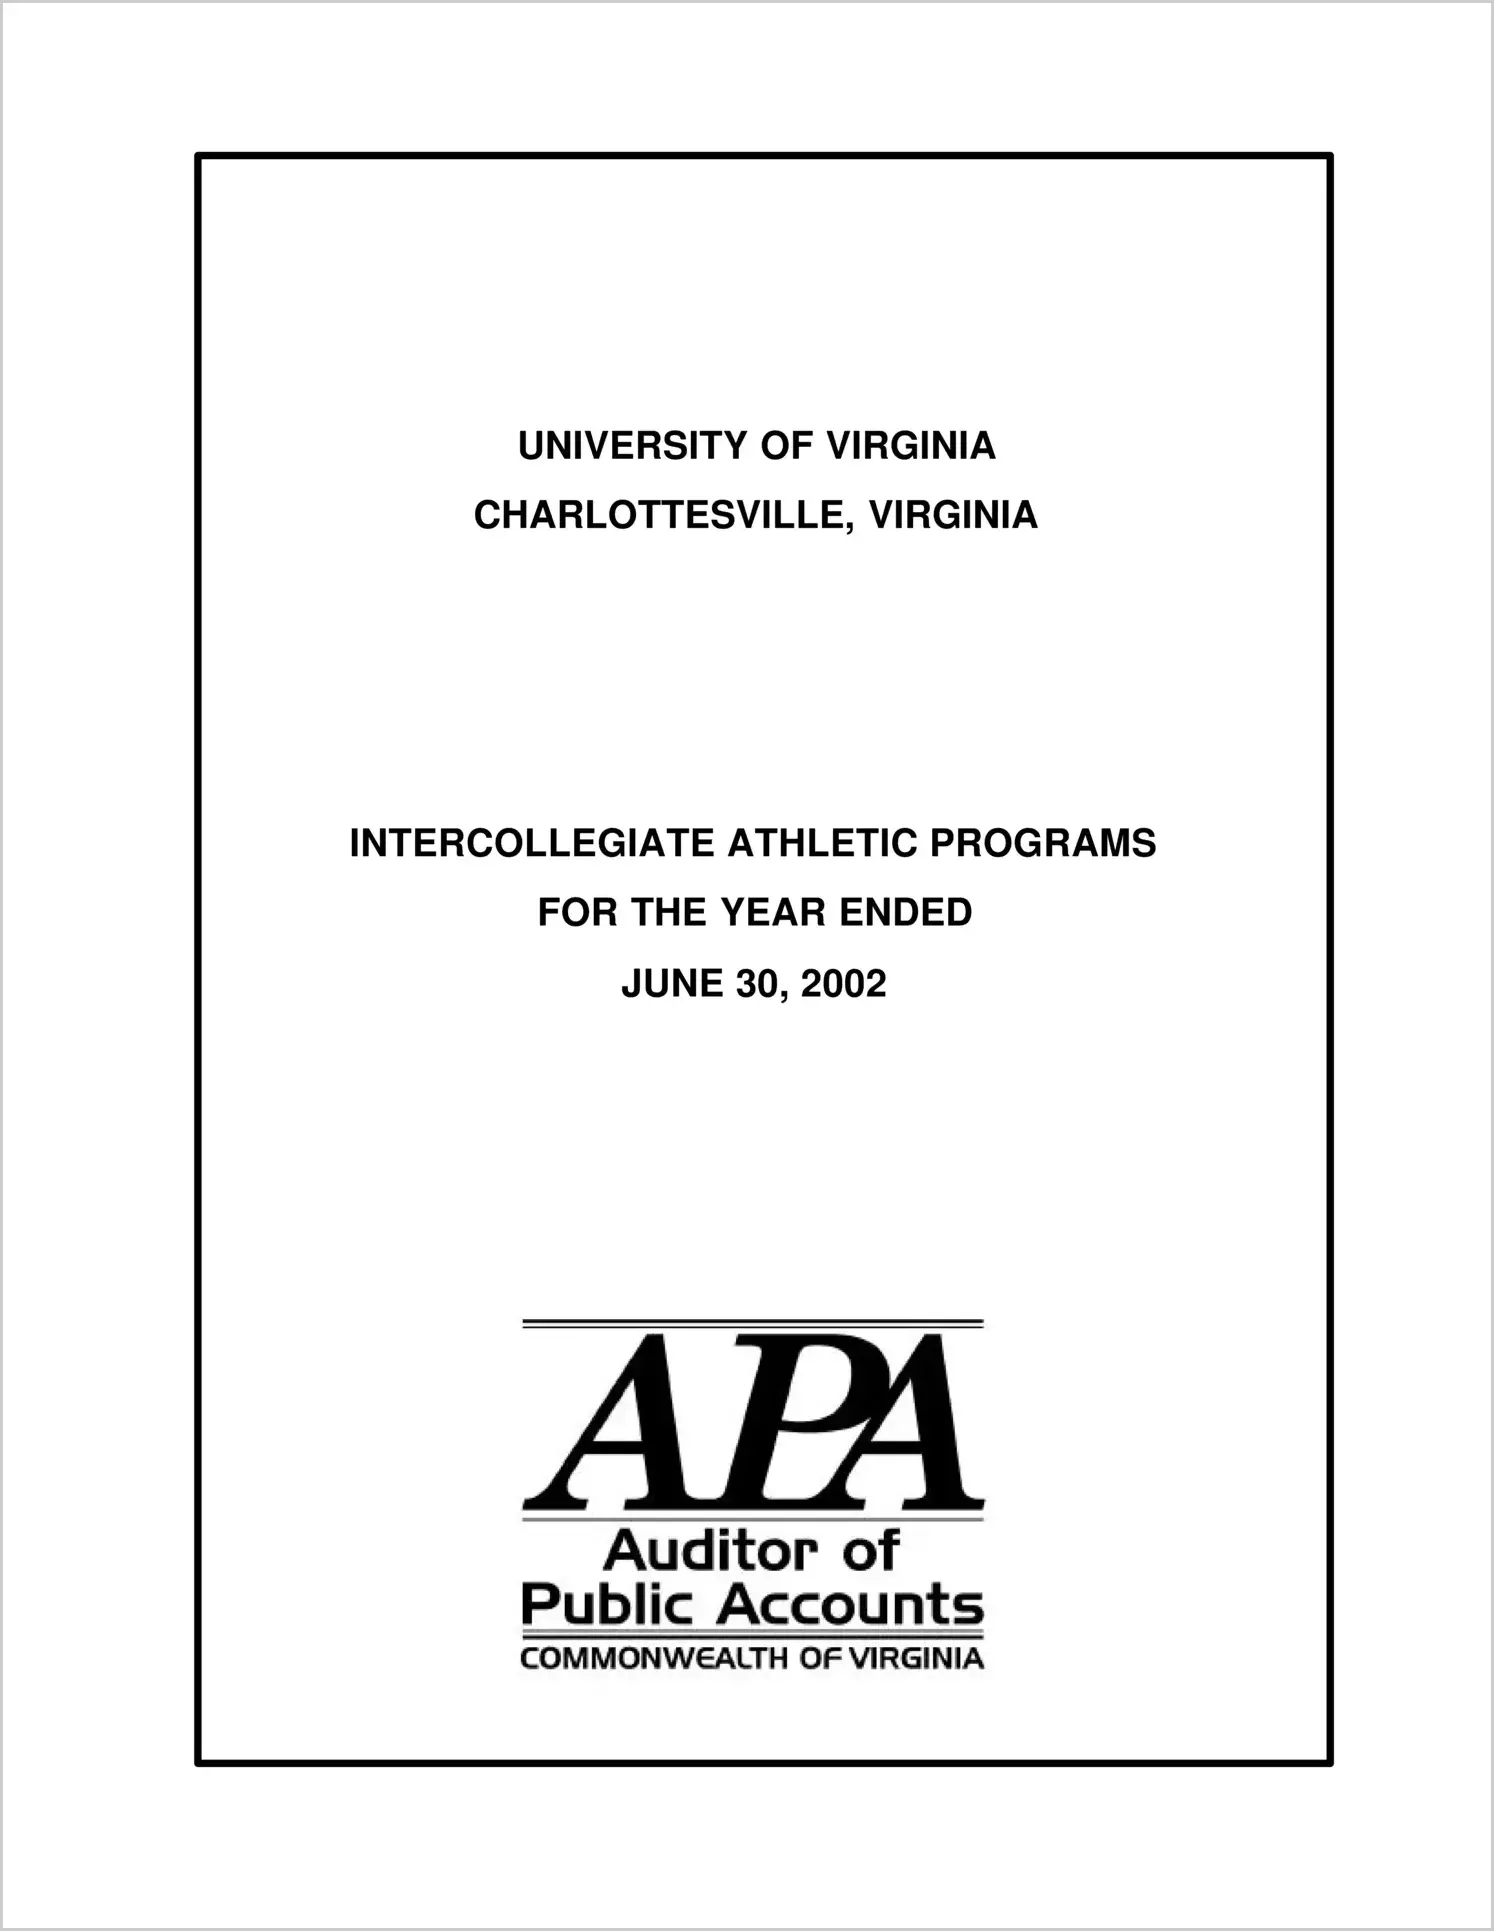 University of Virginia Intercollegiate Athletics Programs for the year ended June 30, 2002